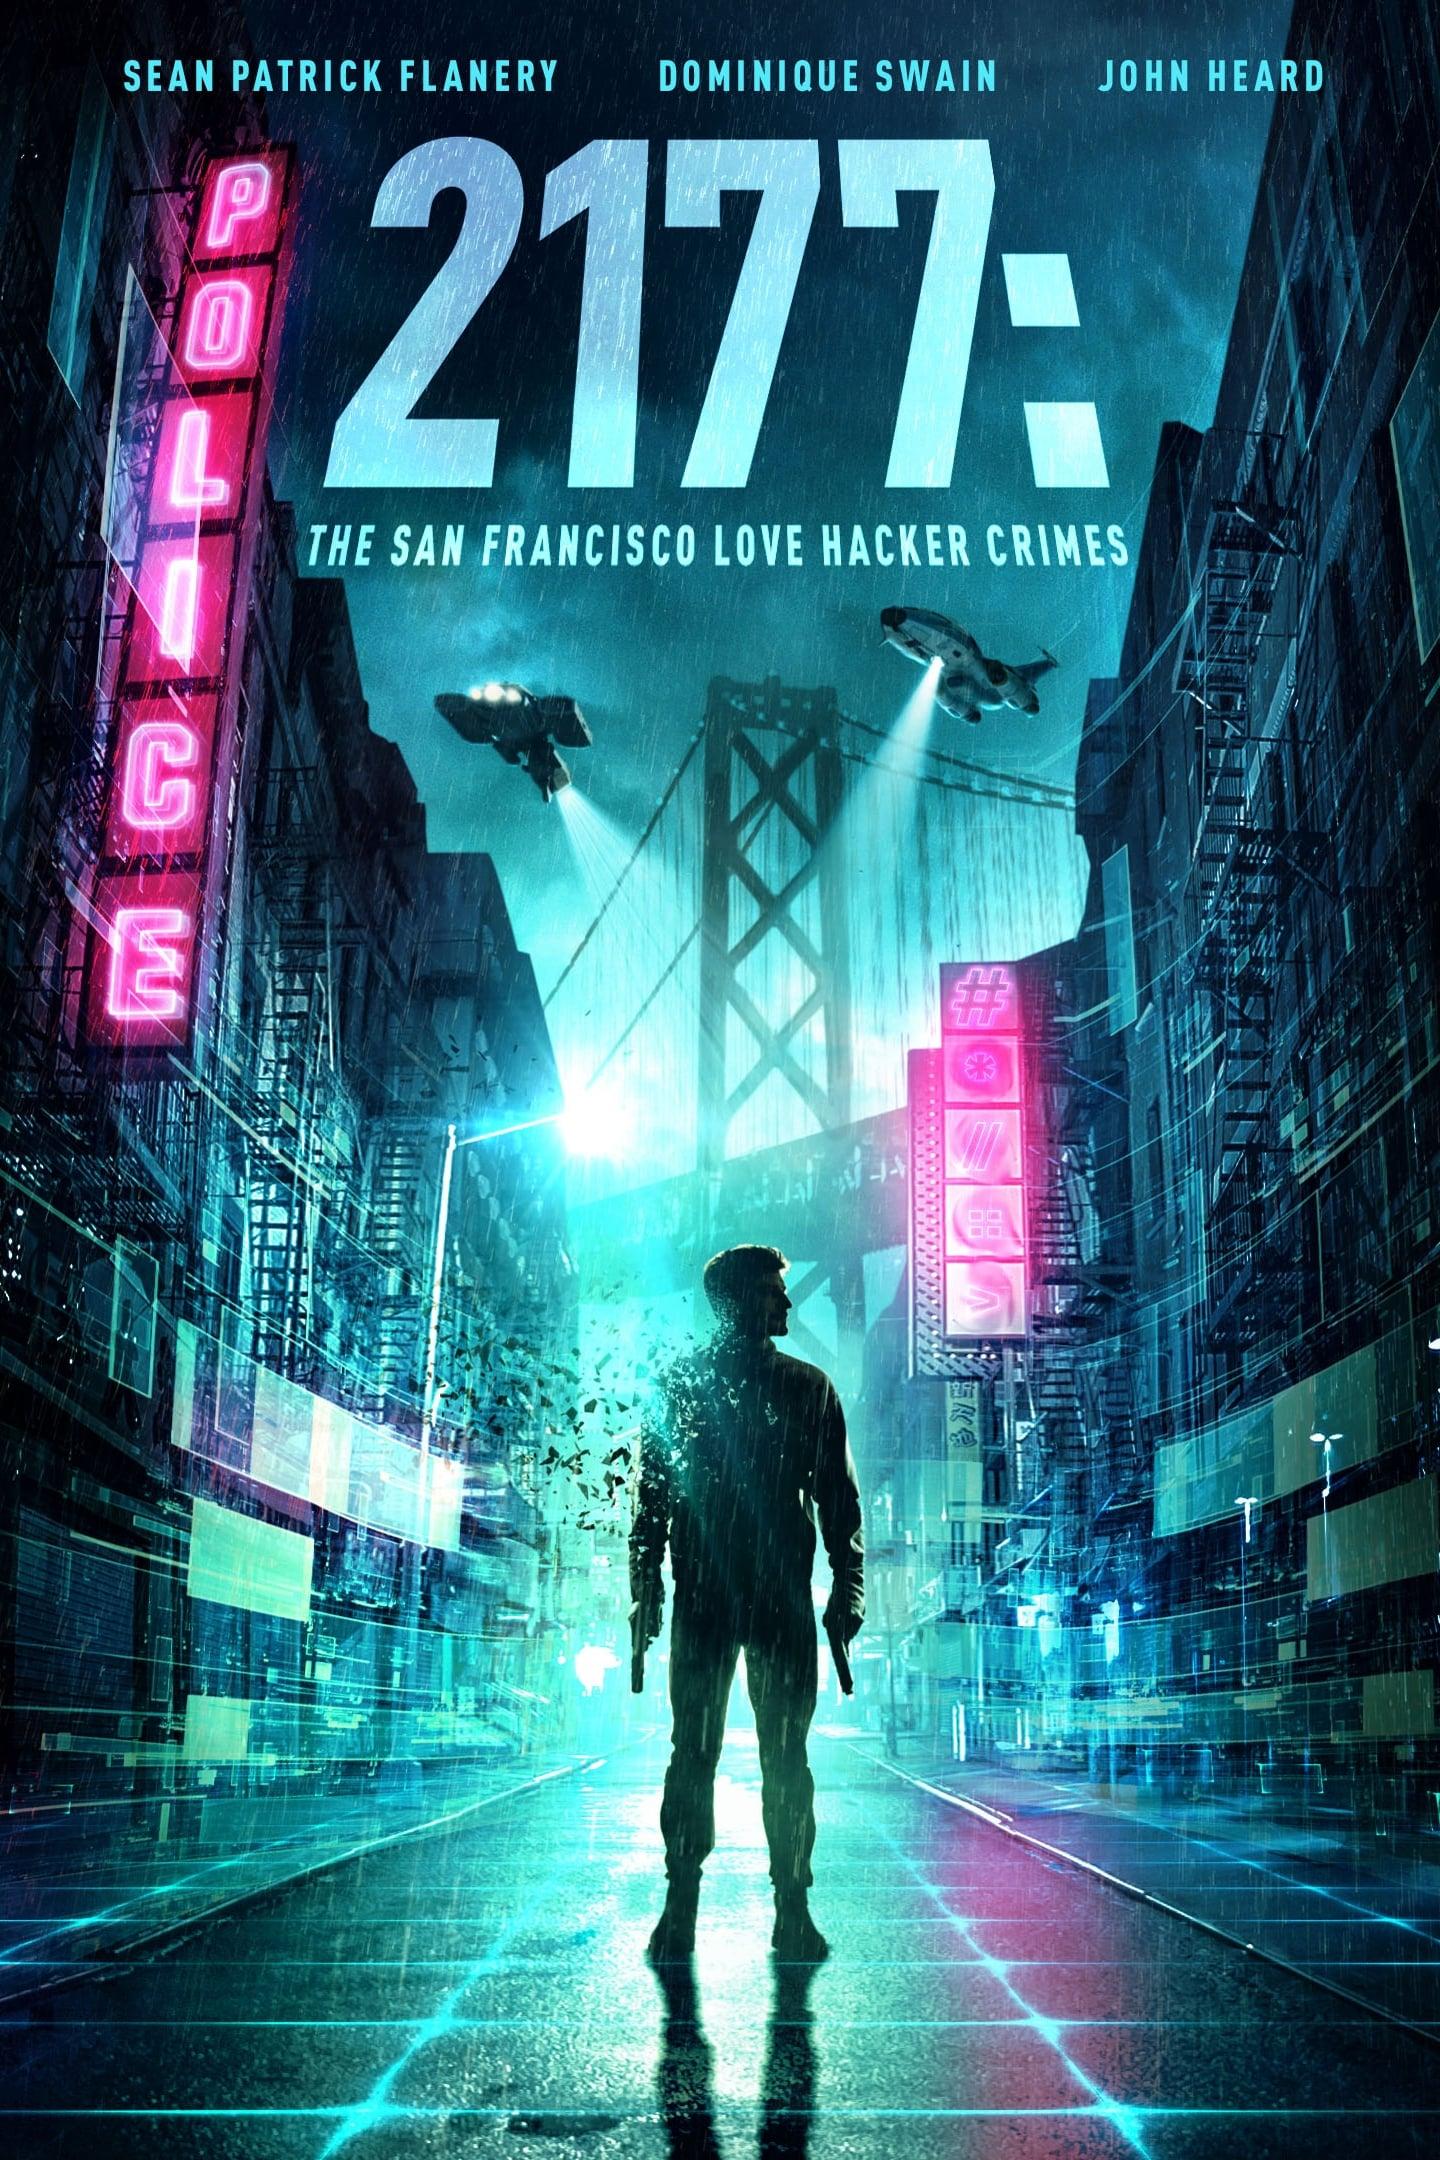 2177: The San Francisco Love Hacker Crimes poster